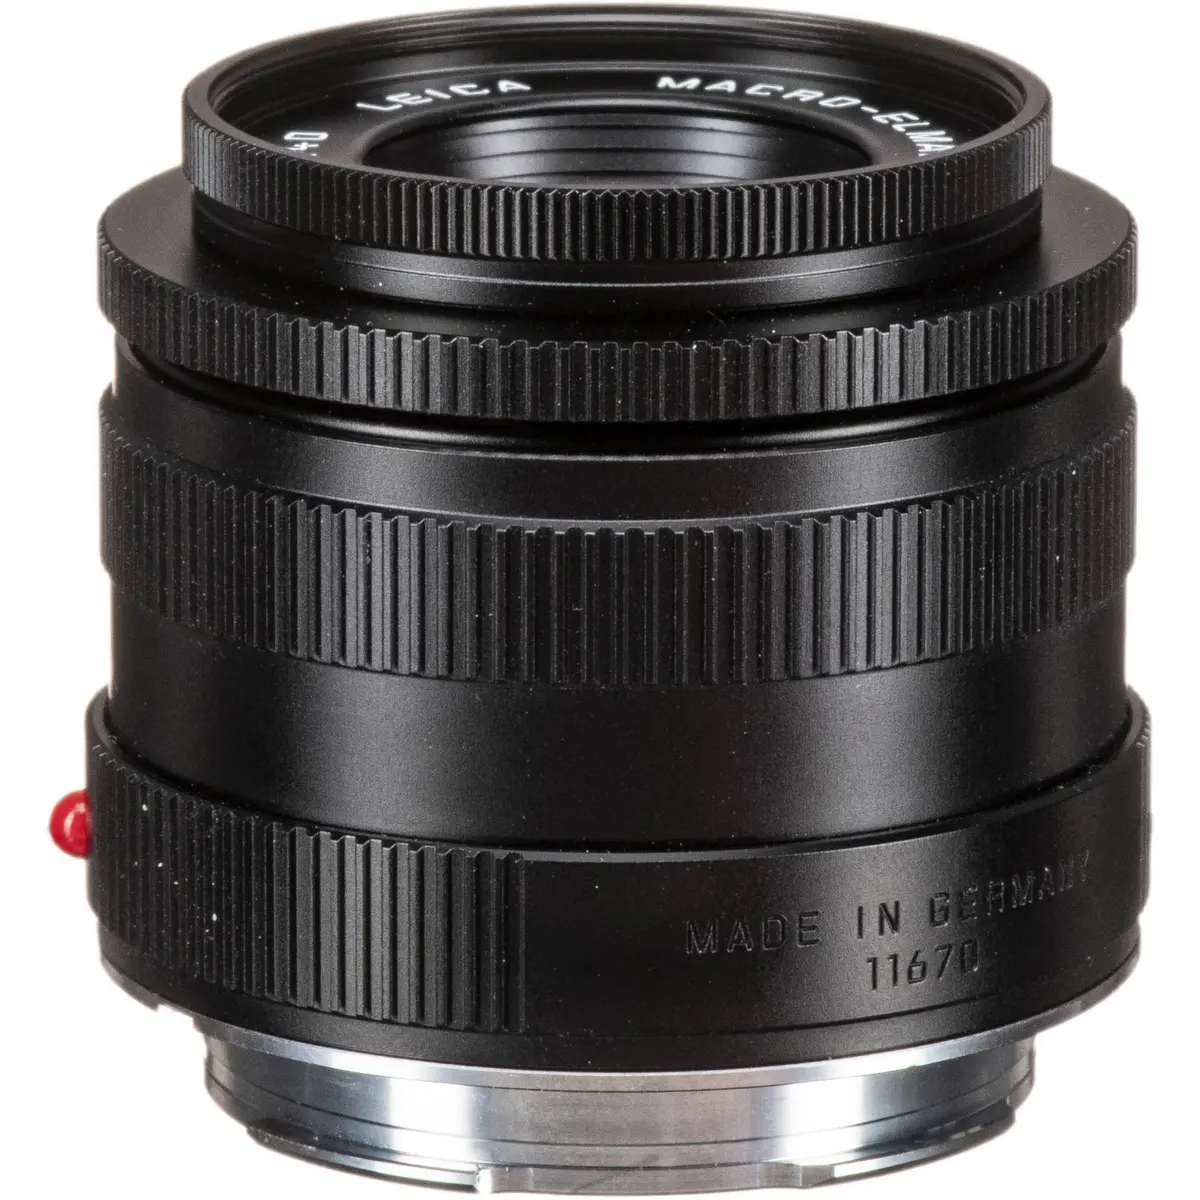 2. Leica Macro-Elmar-M 90mm F4 (11670)